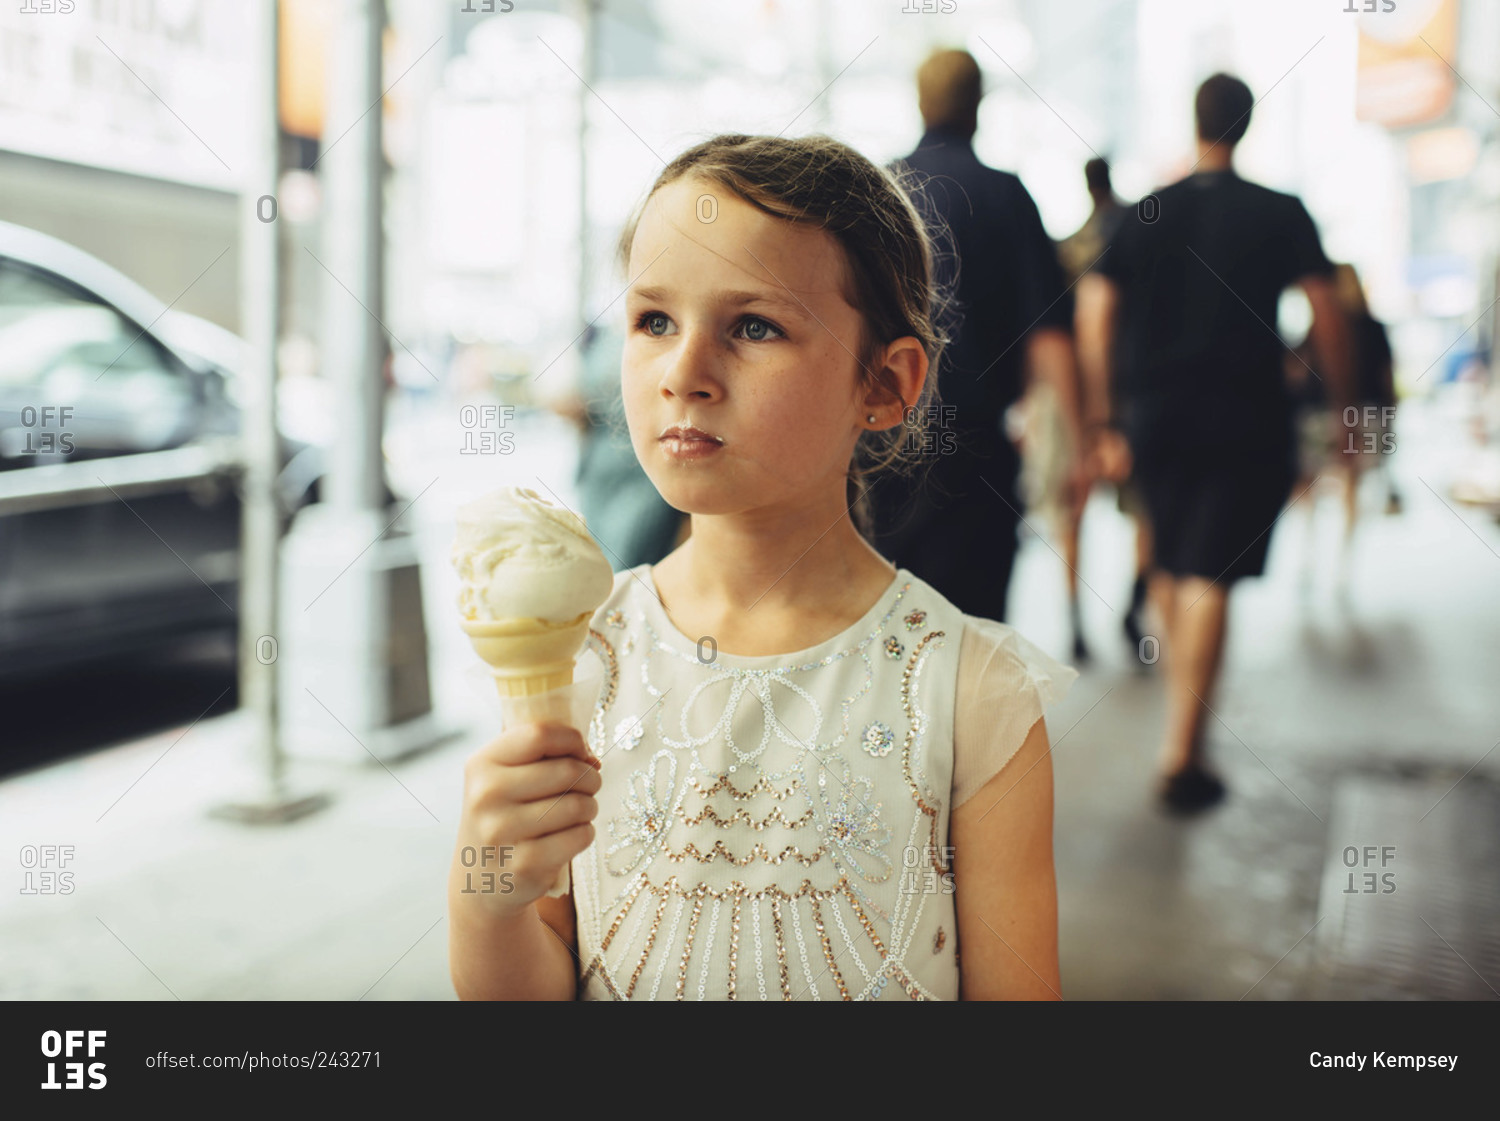 Portrait of girl eating ice cream on city sidewalk